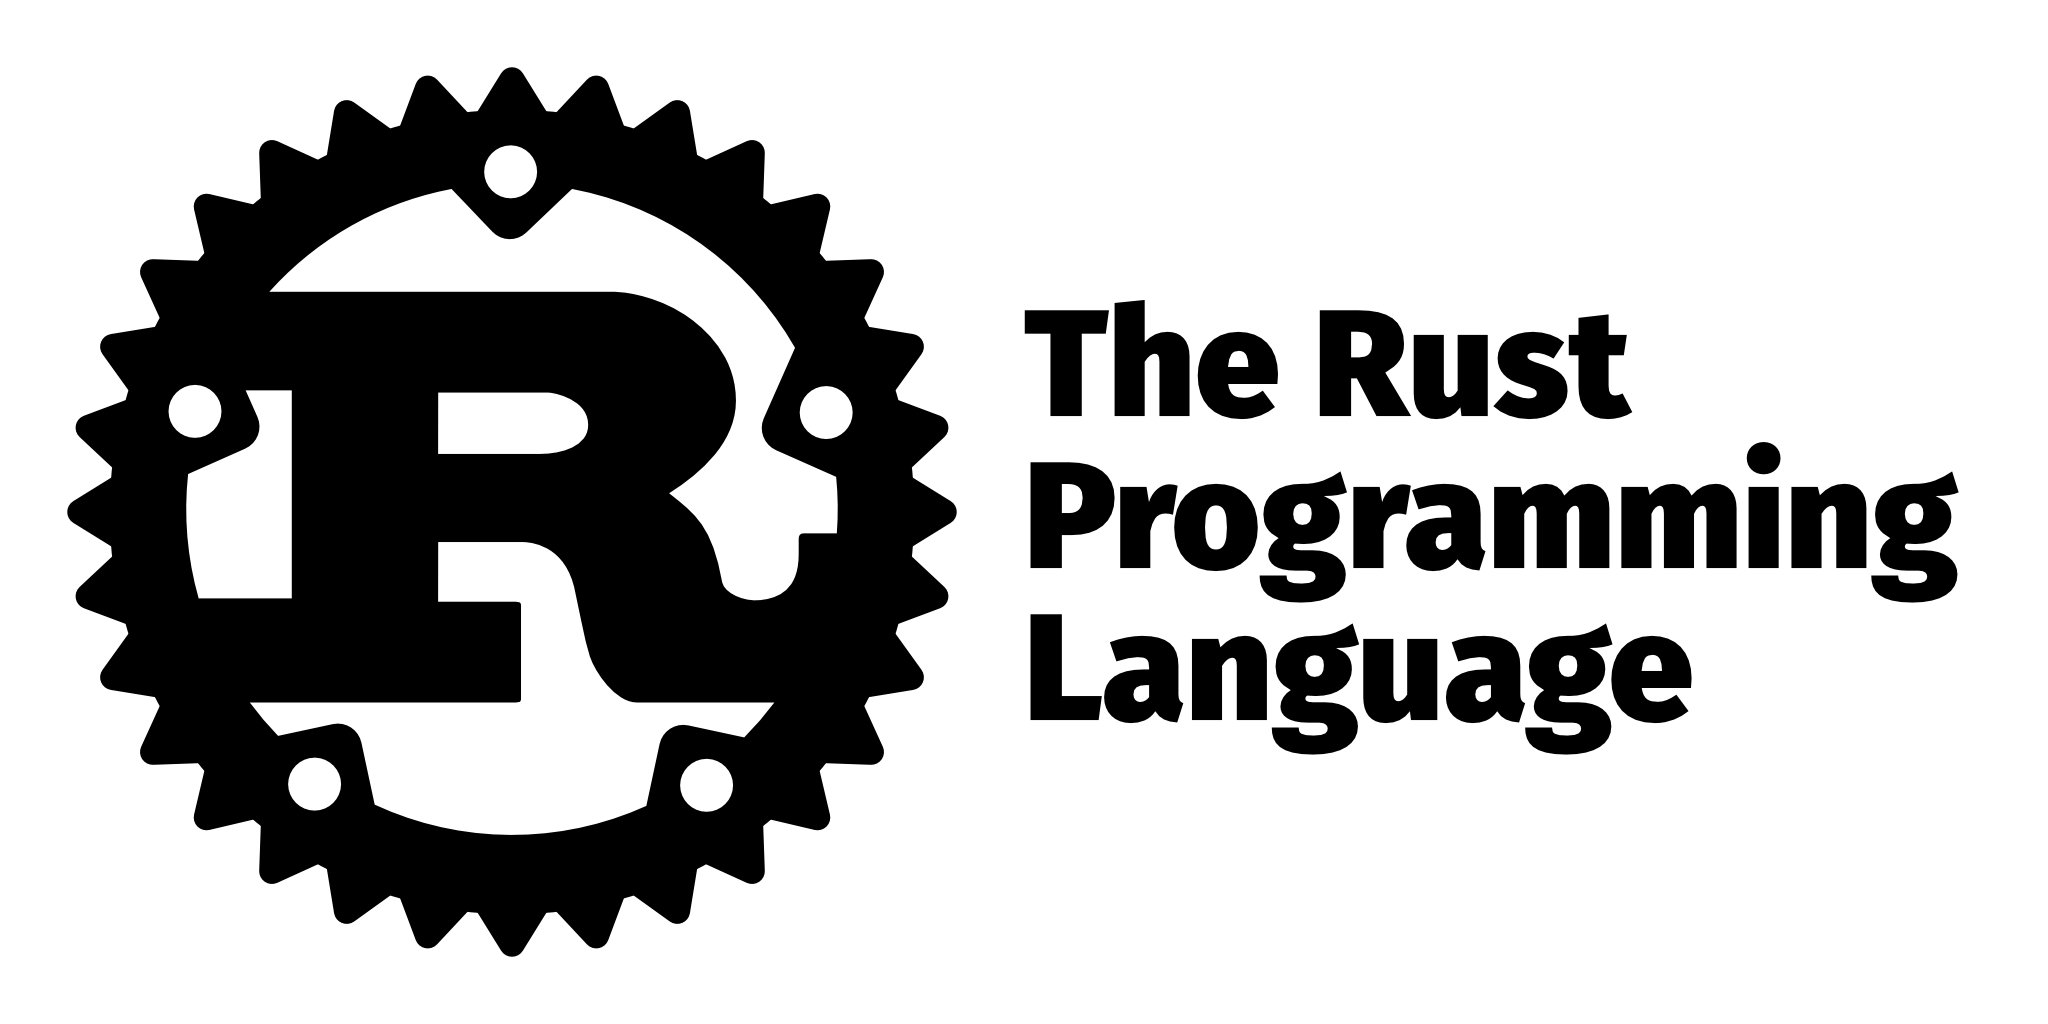 Programming in Rust